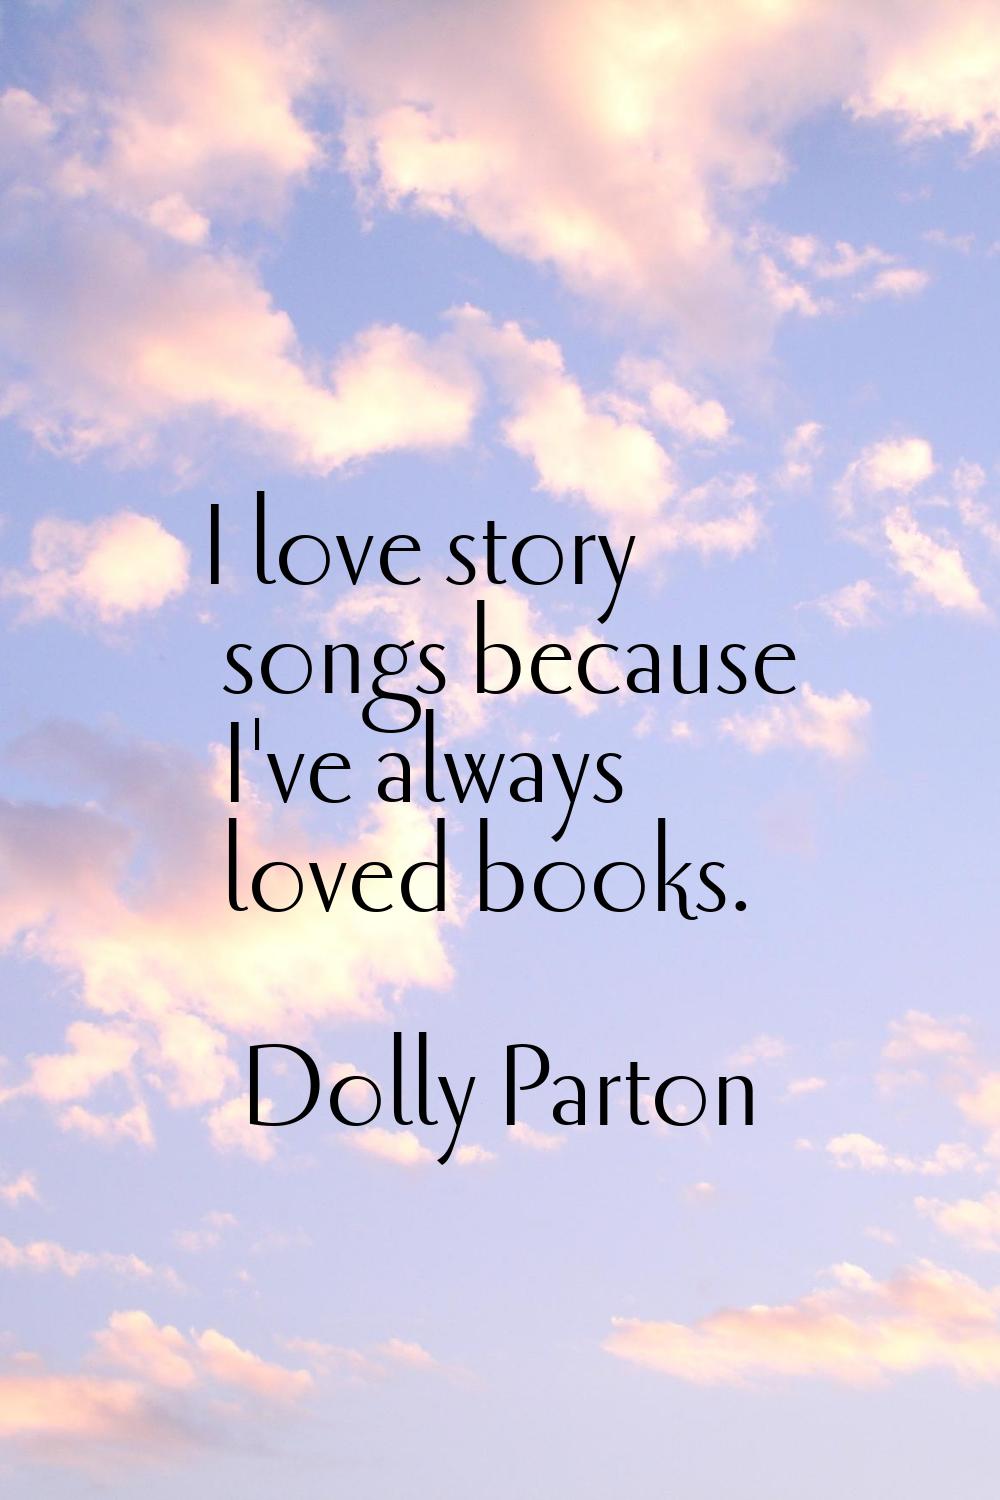 I love story songs because I've always loved books.